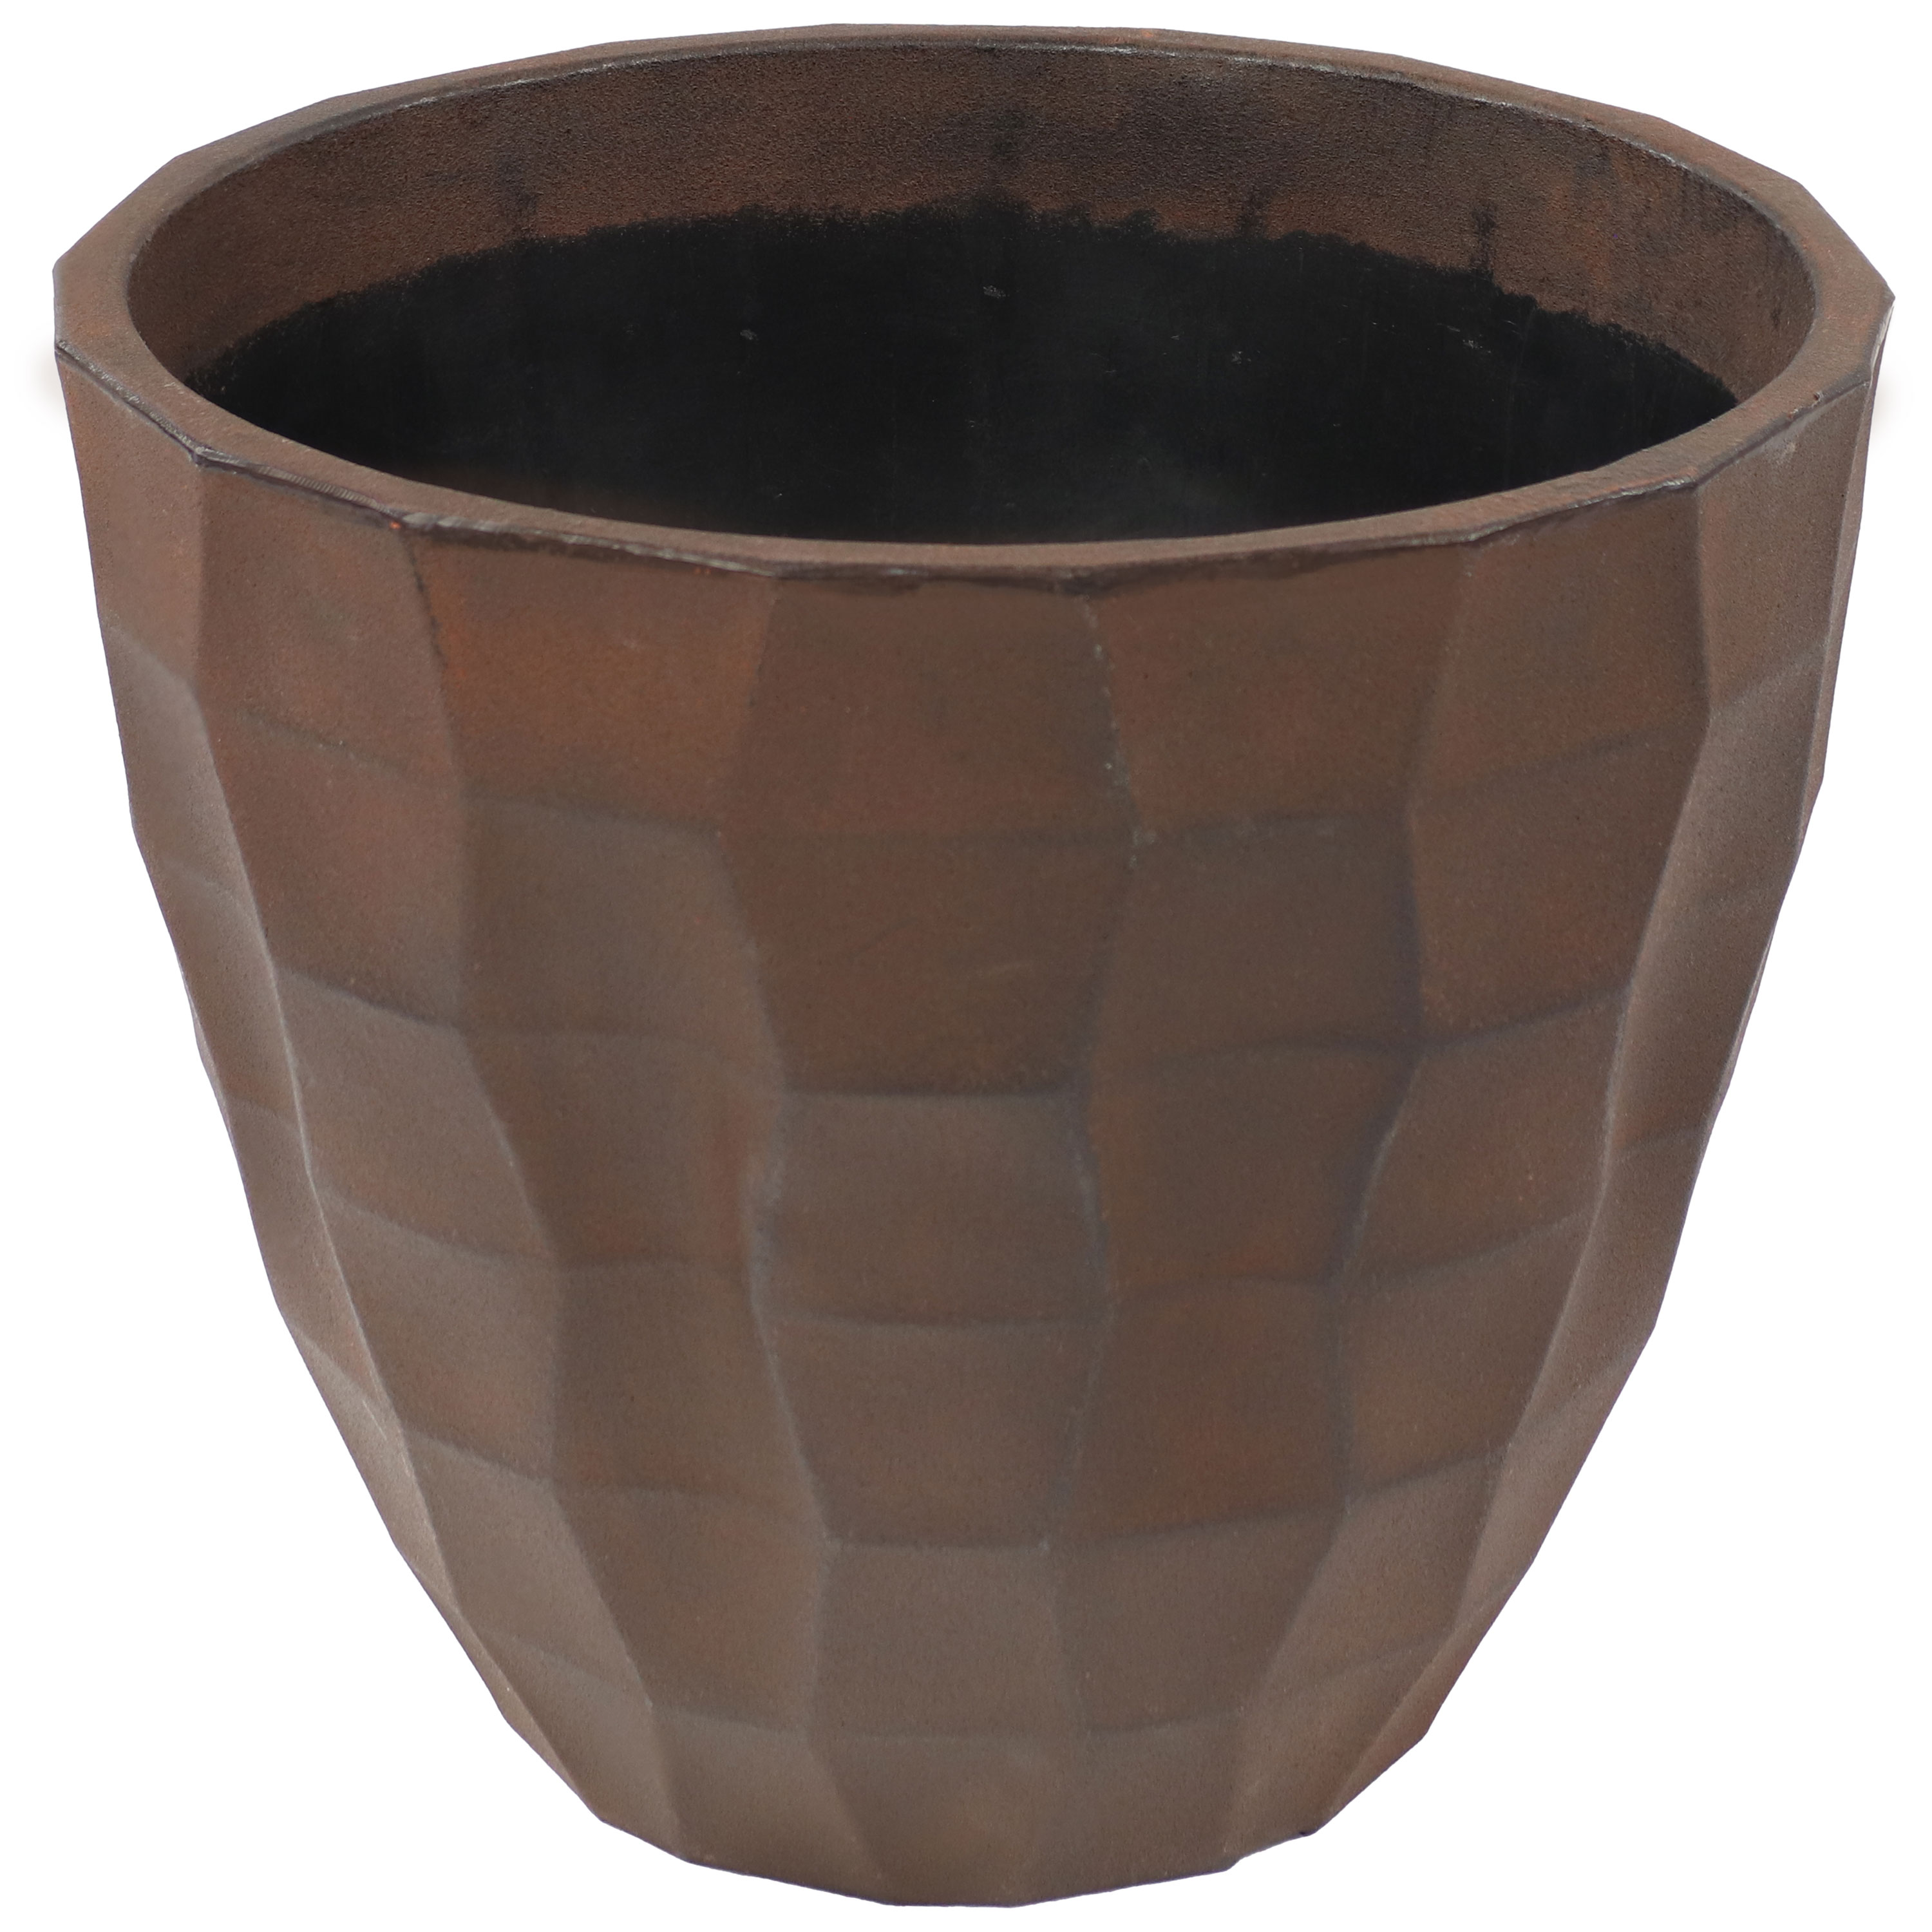 15.75 in Pebbled Polyresin Outdoor Planter - Dark Brown